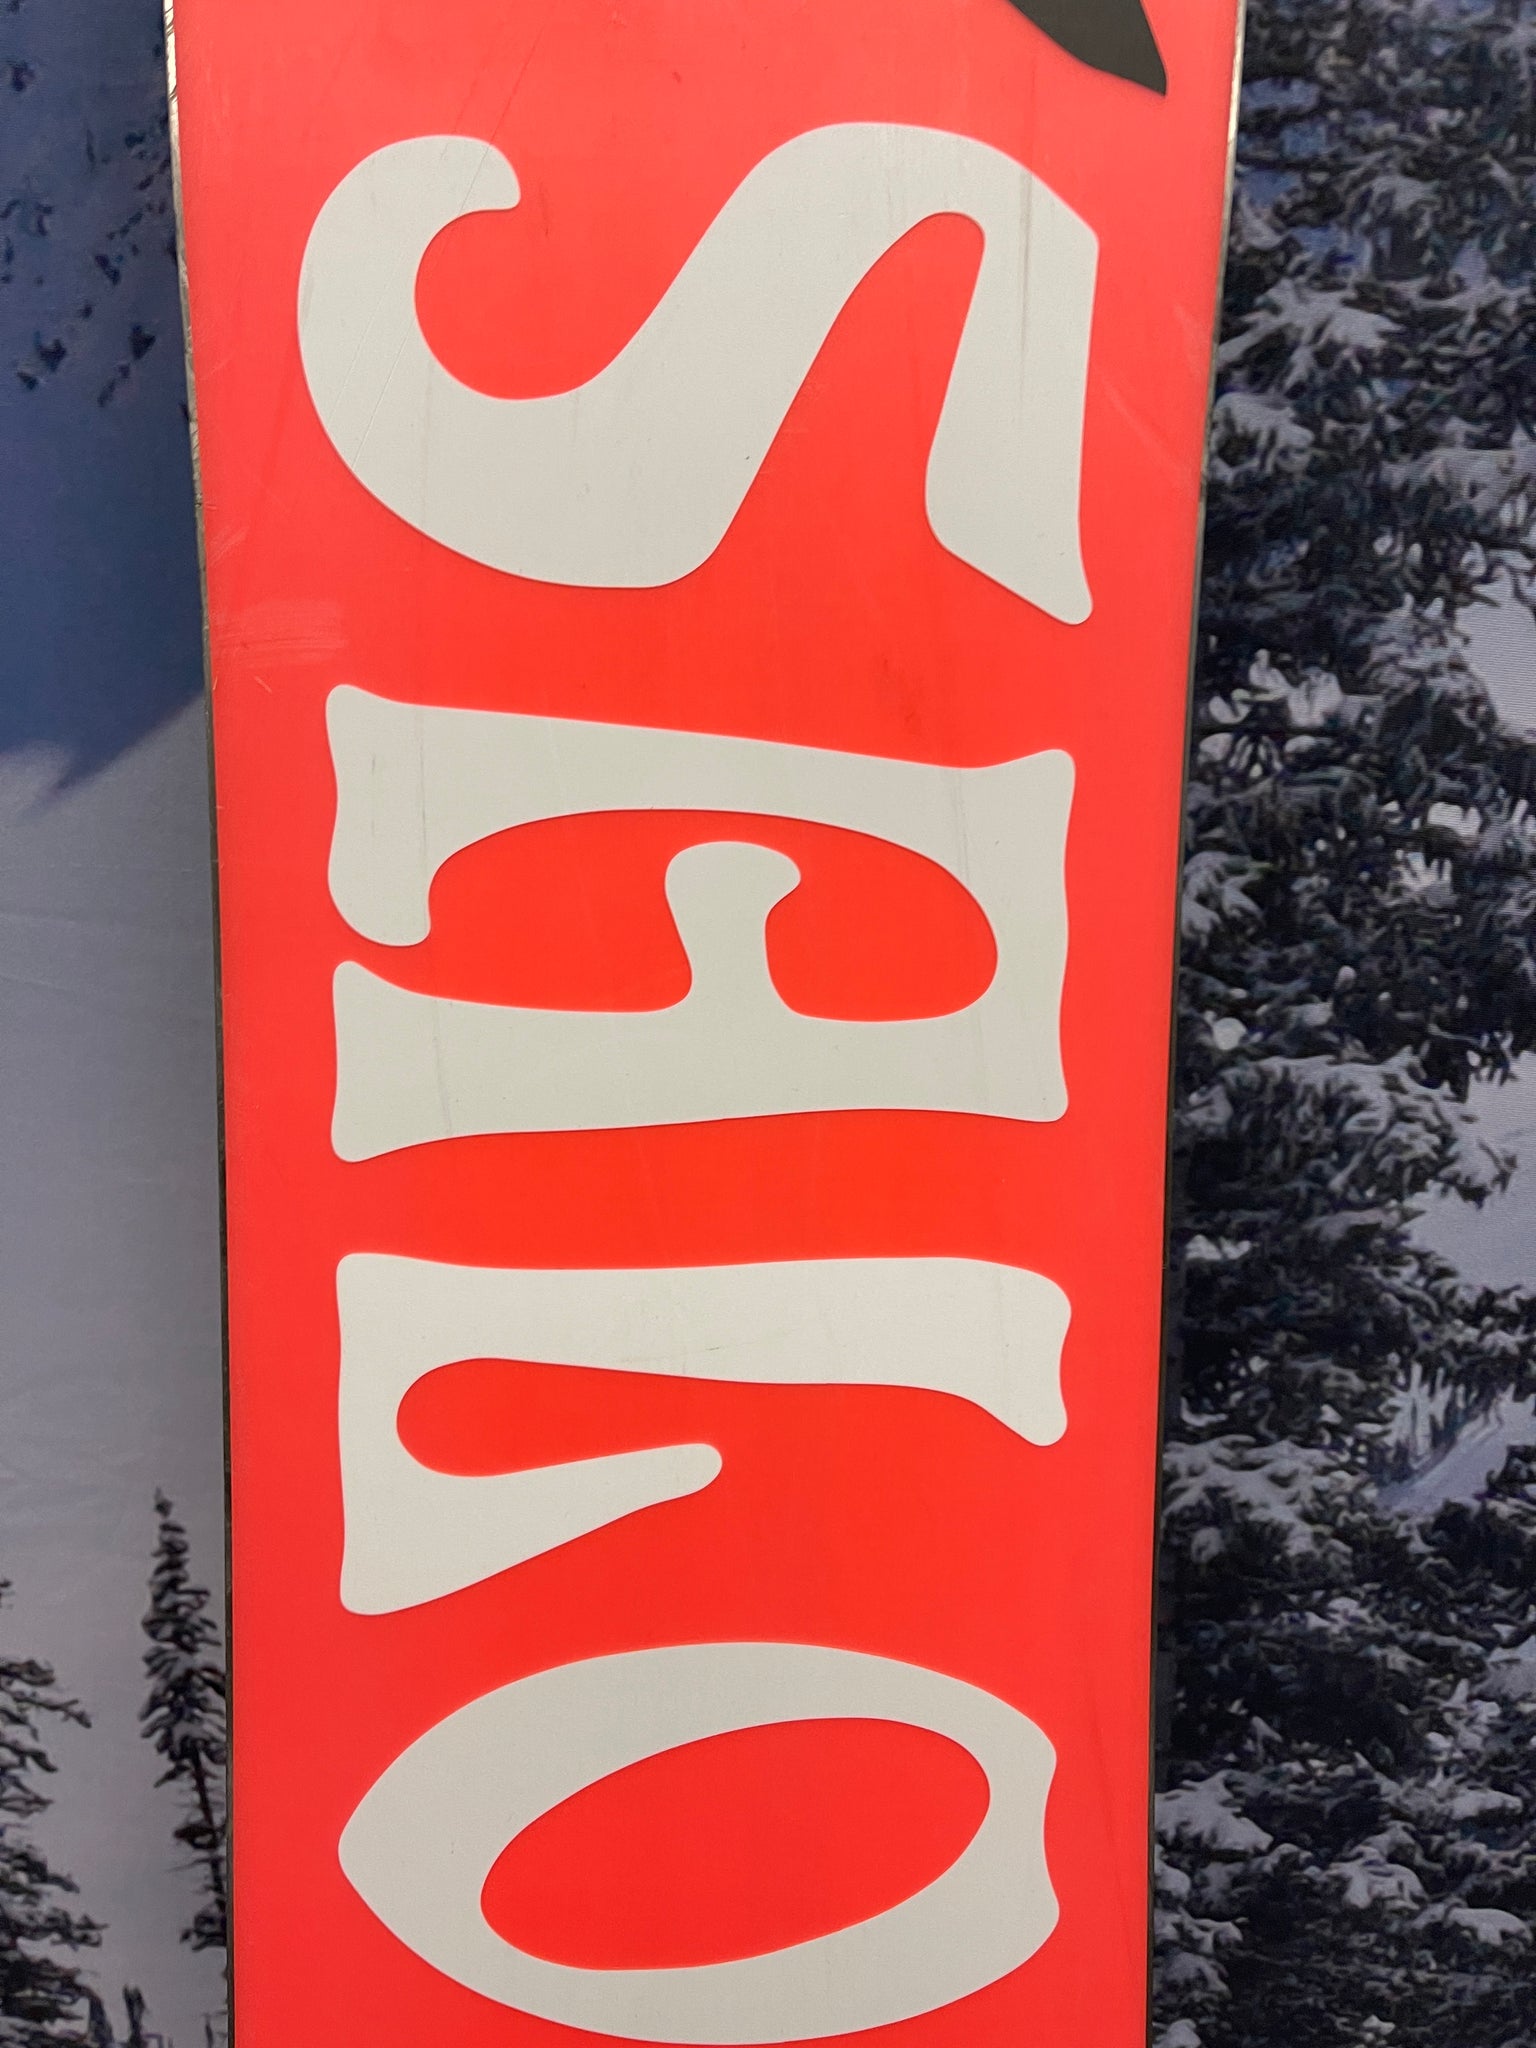 USED Salomon Assassin 150cm - 2021 All-Mountain Snowboard